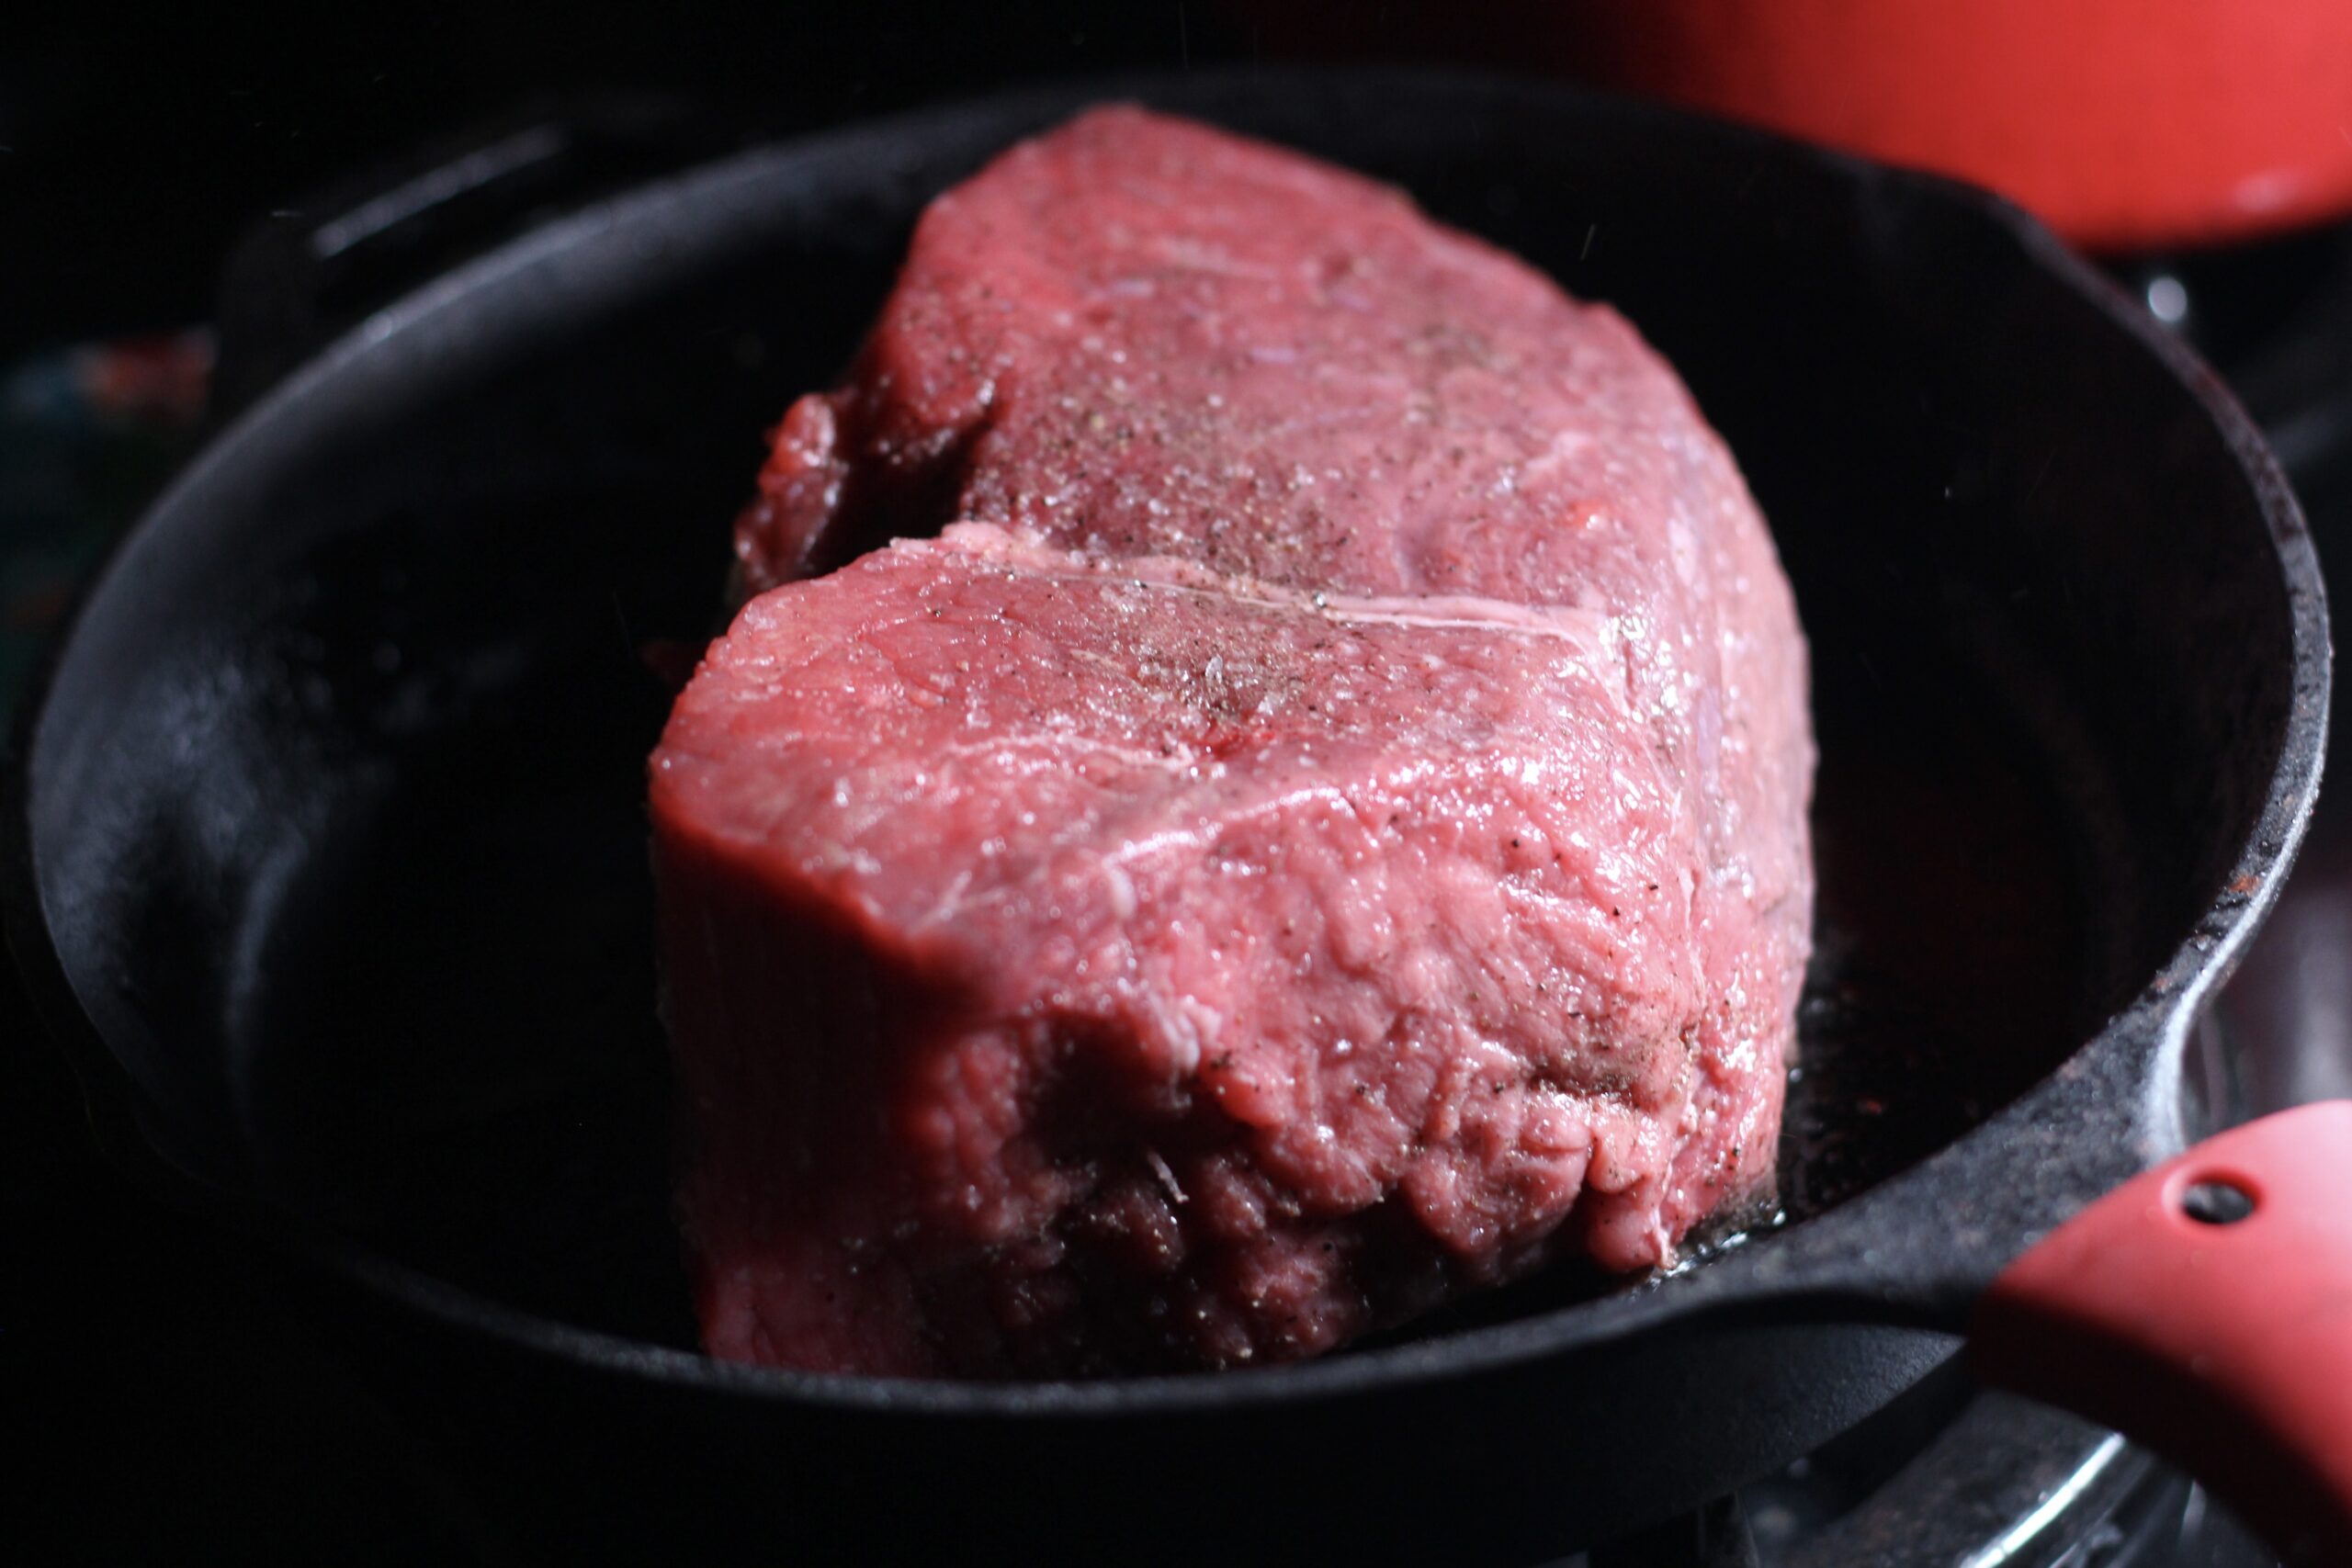 Searing a roast beef